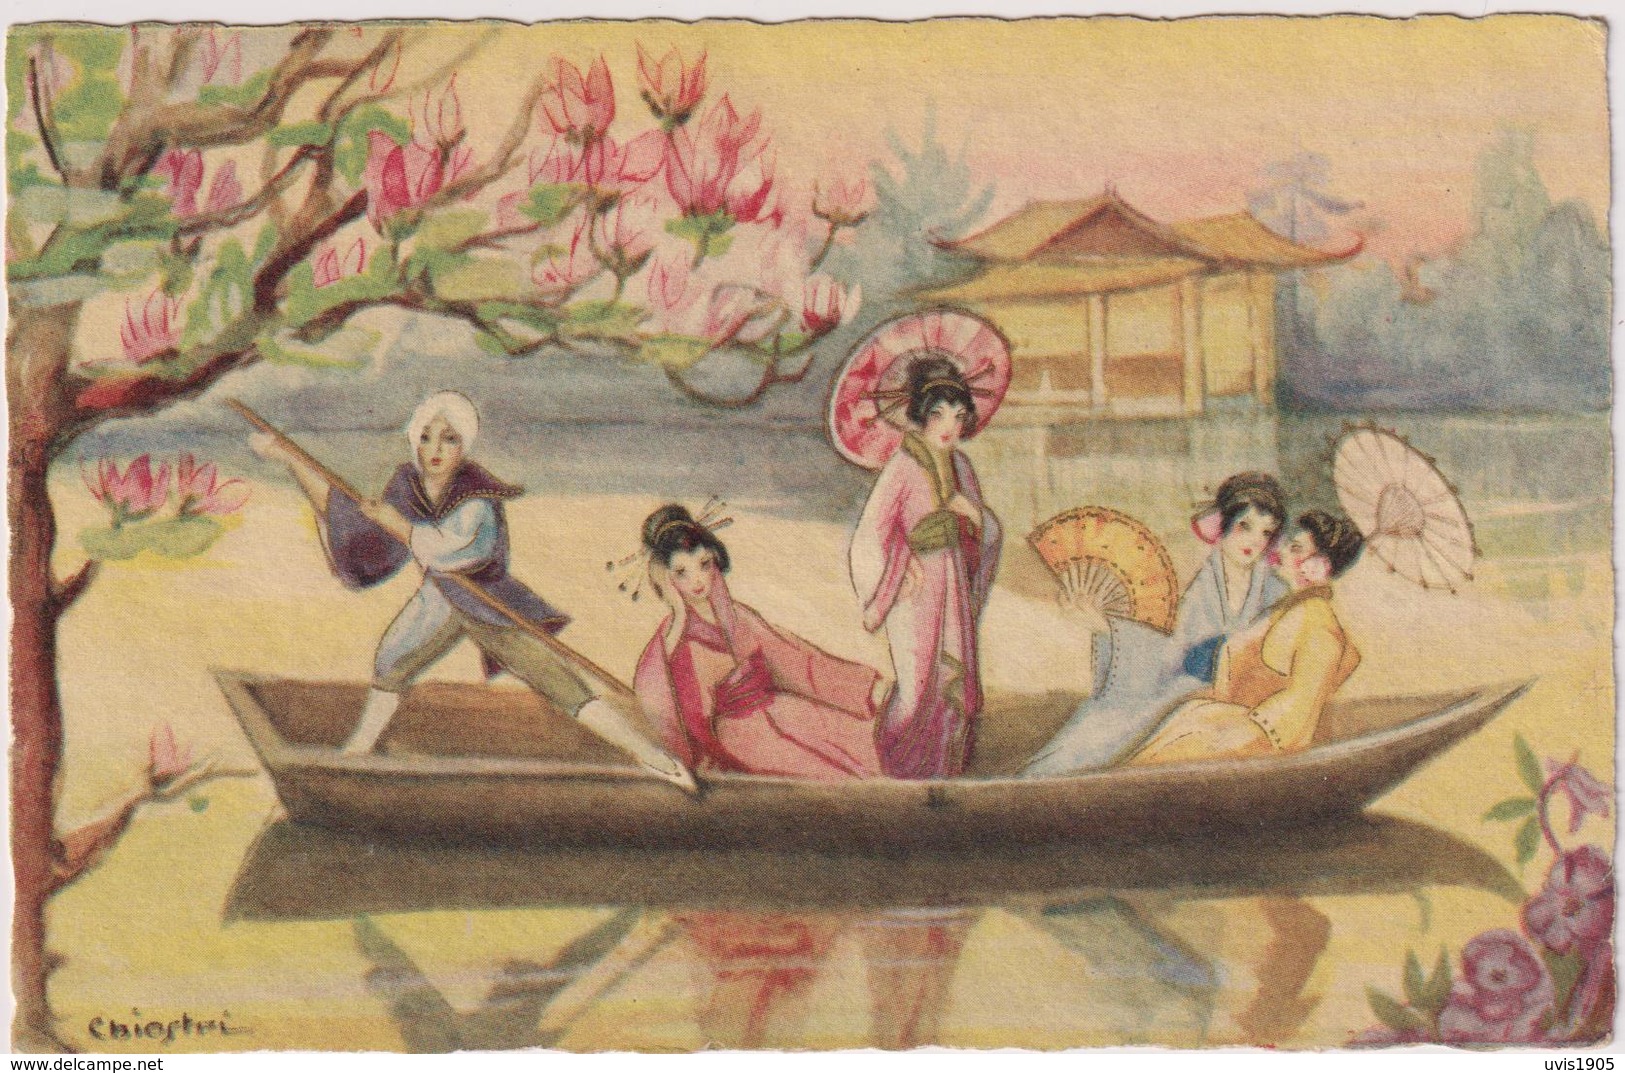 Chiostri.Japan Geishas On Boat.Ballerini & Fratini Edition Nr.318 - Chiostri, Carlo